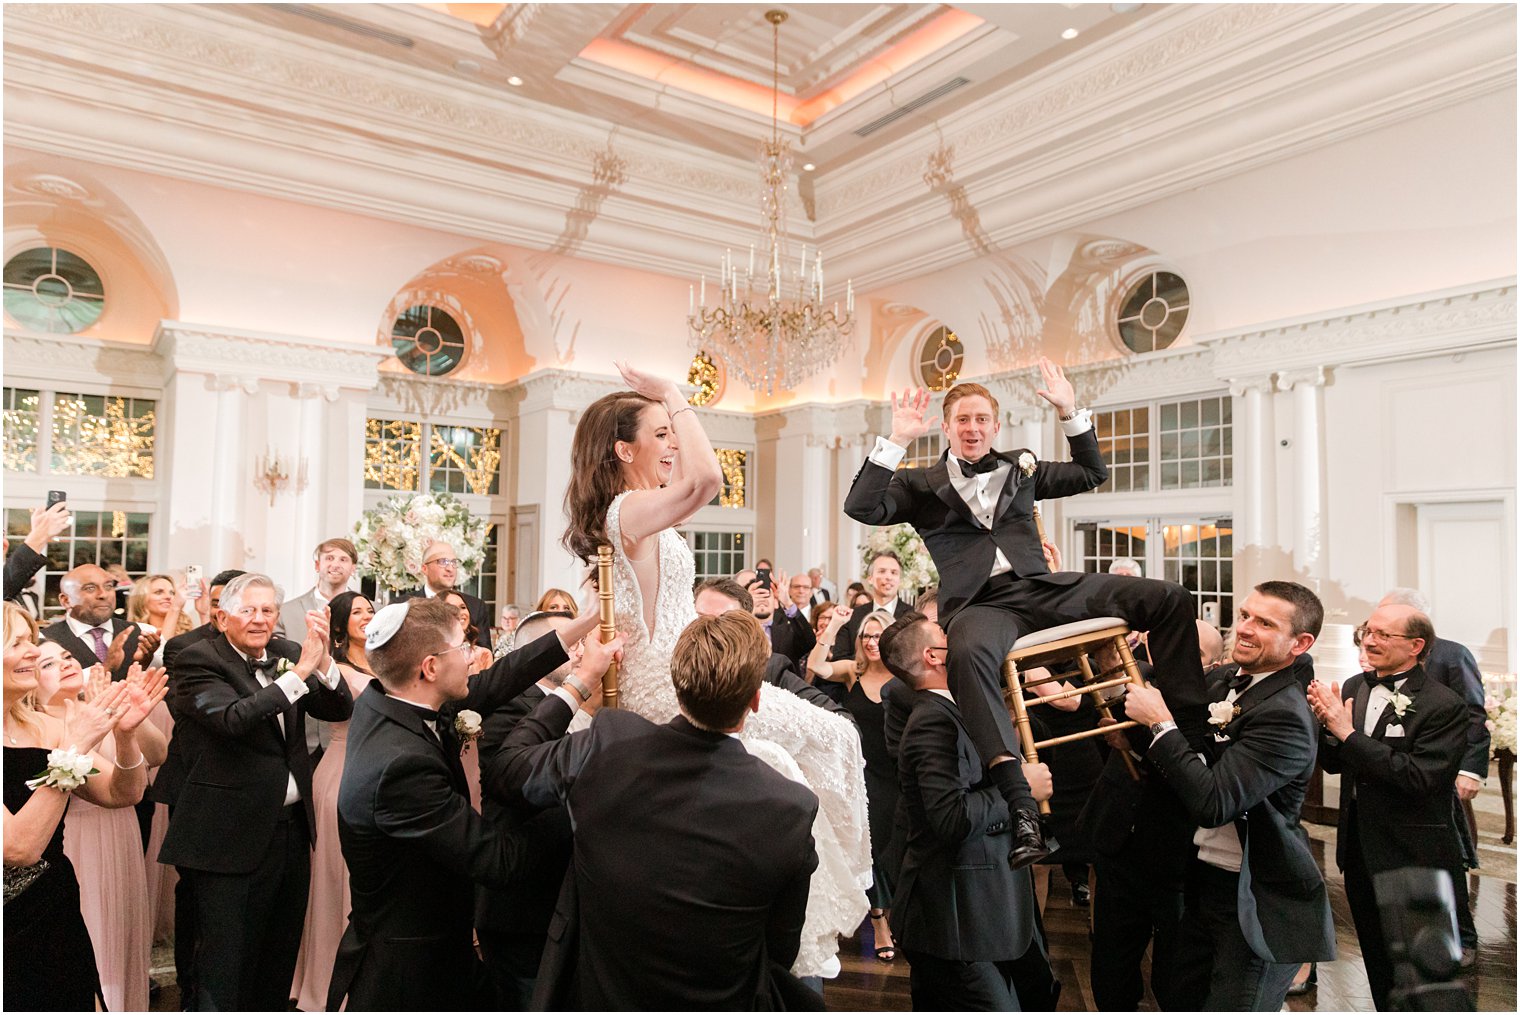 groomsmen lift bride and groom during Hora at East Brunswick NJ wedding reception 